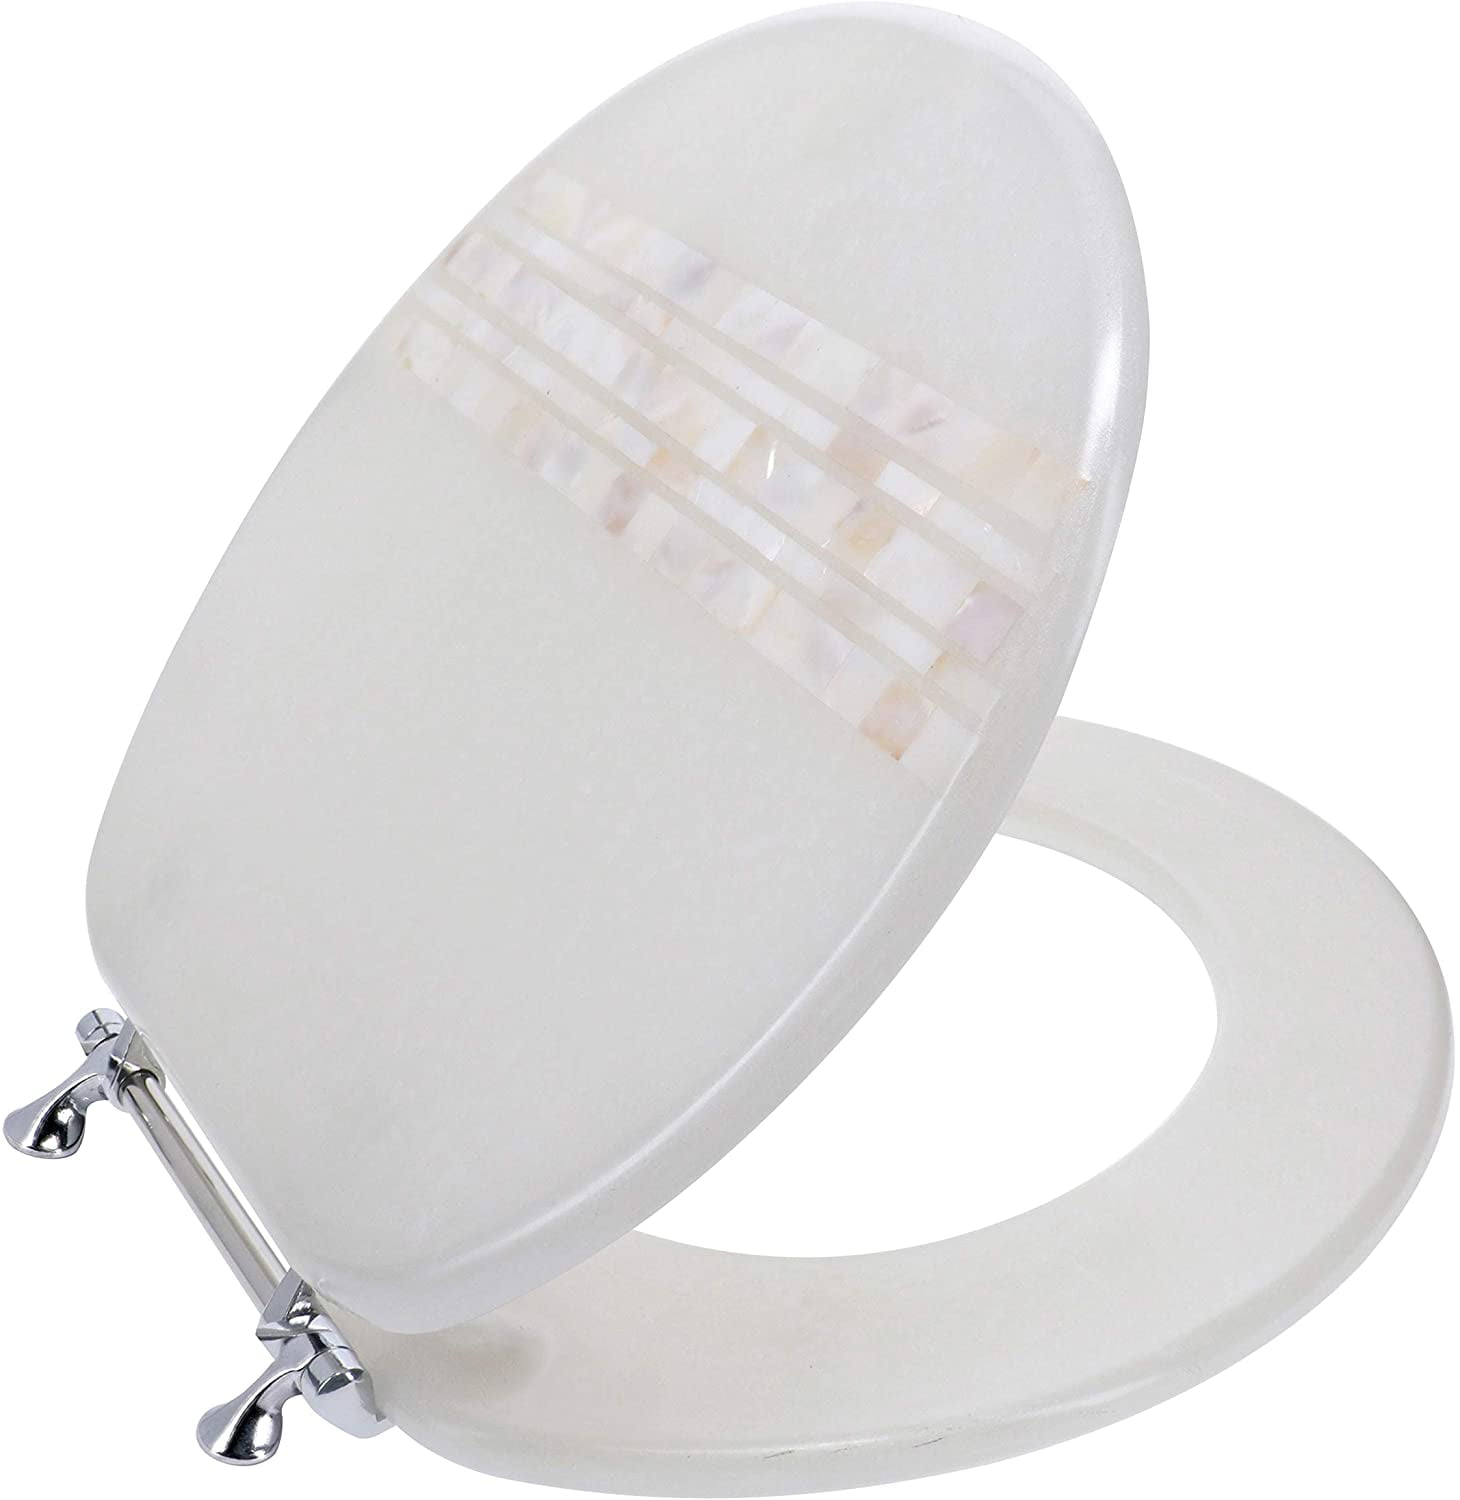 Mother Pearl Resin Toilet Seat Standard Round Chrome Hinges Elegant Comfort New 